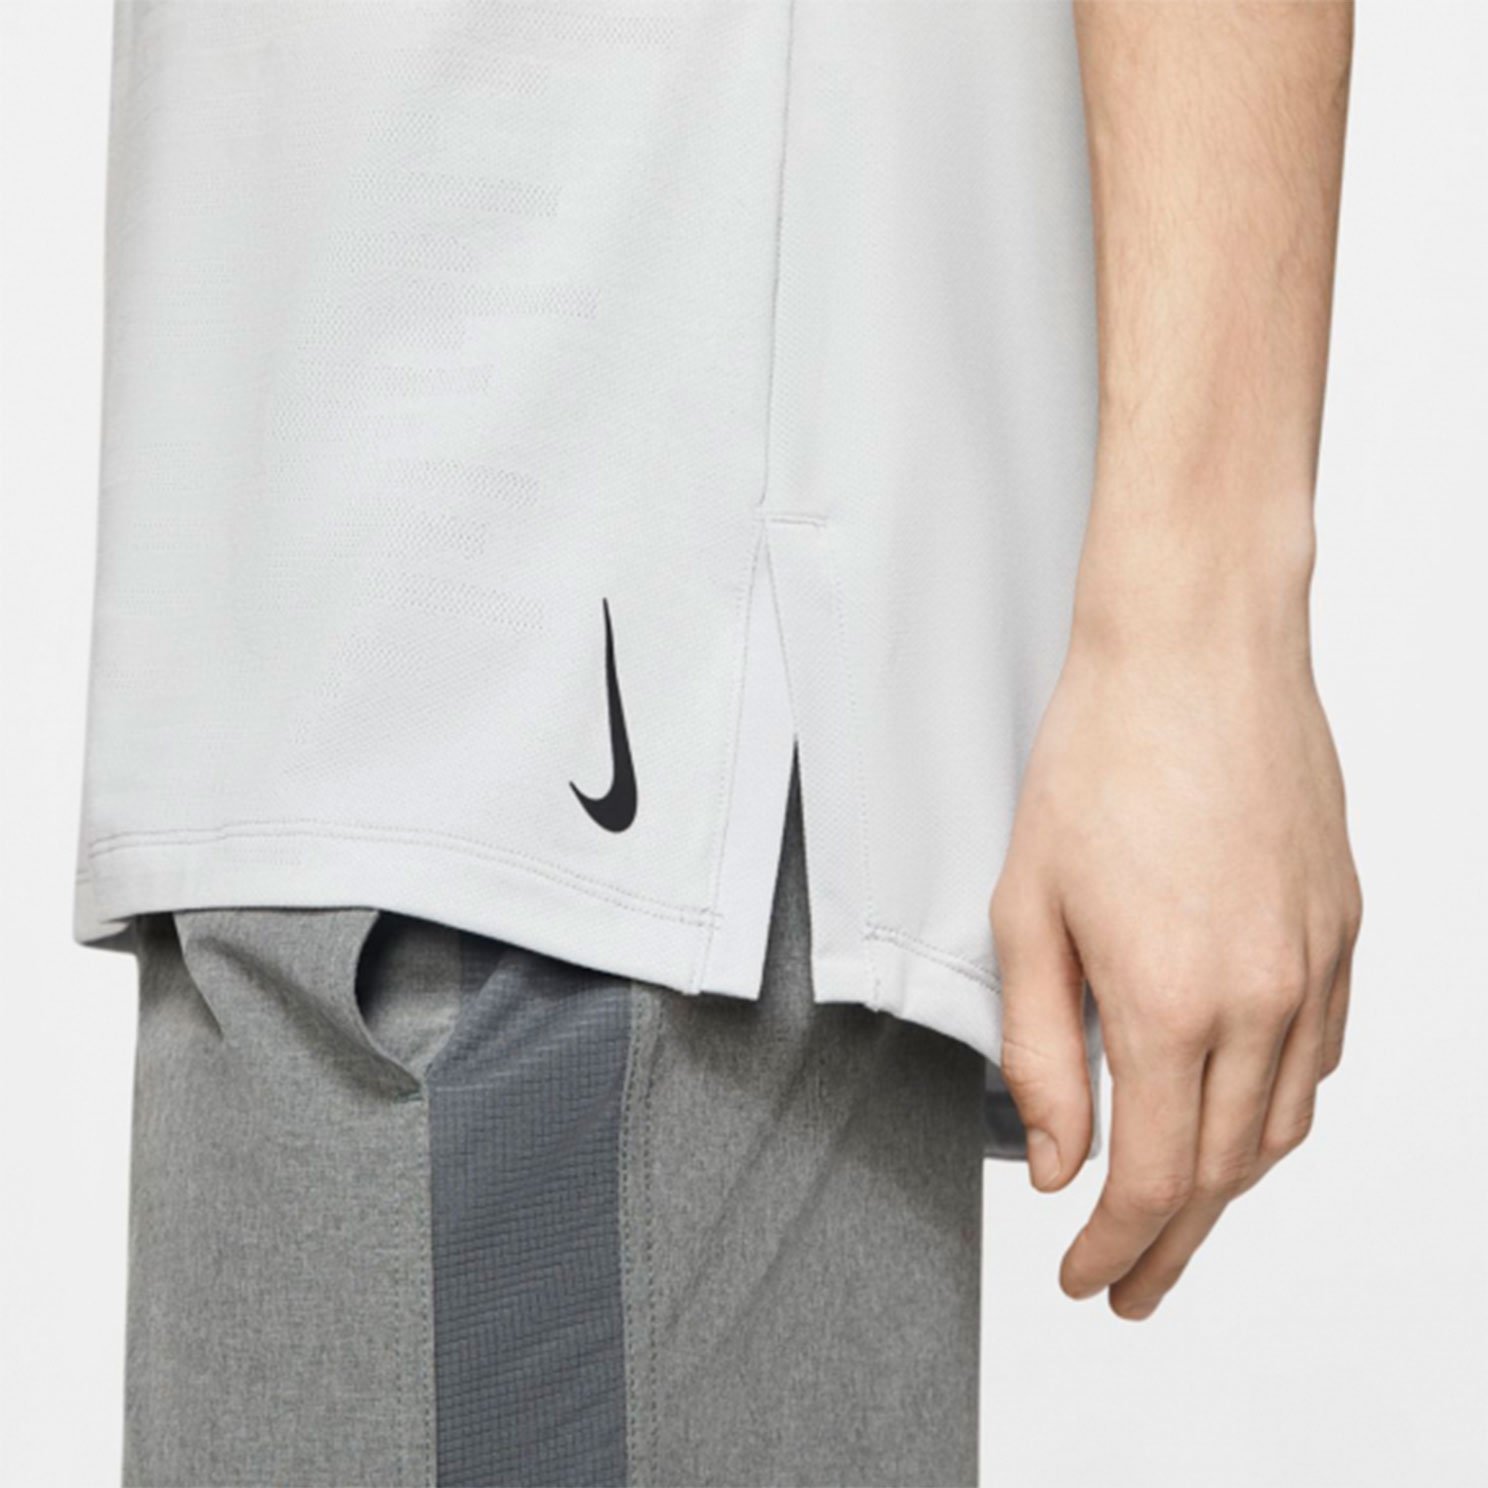 Футболка Nike Dry Top Pinnacle Yoga